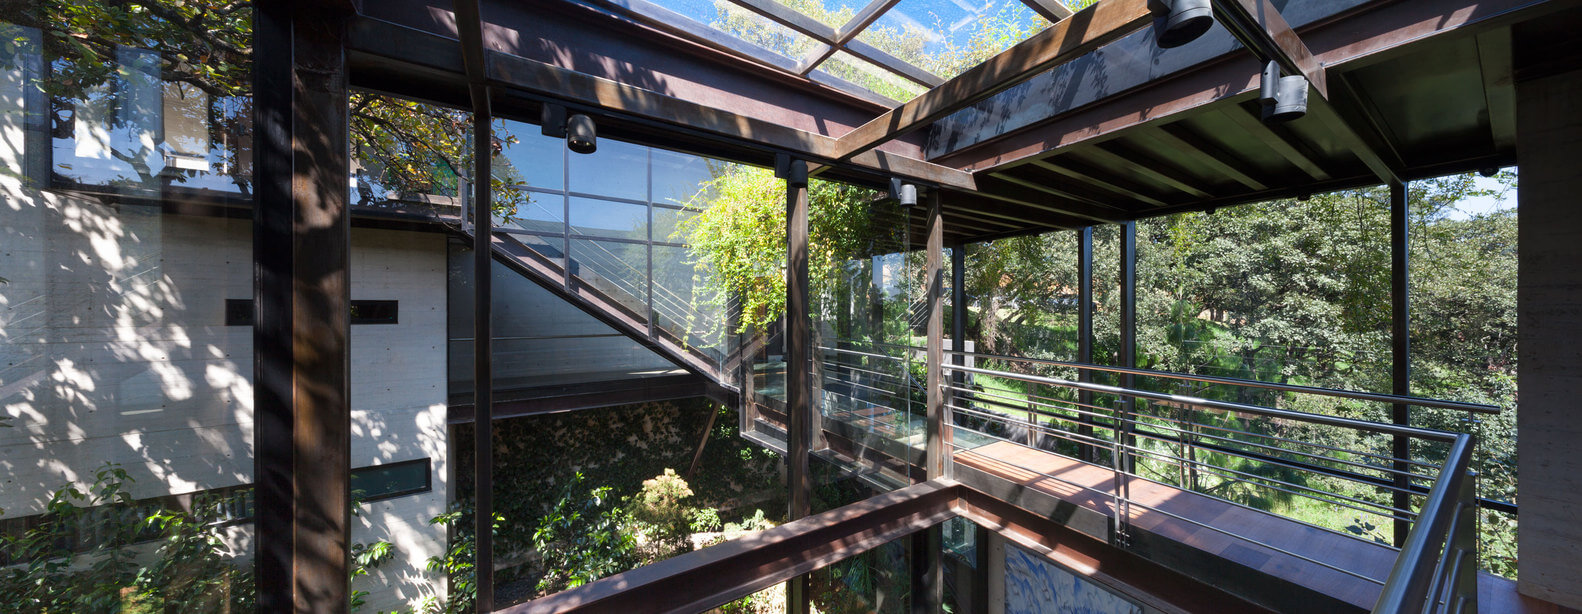 Casa no bosque na Cidade do México por Grupoarquitectura 013 Corredor + Piso de Vidro + Escada + Aço